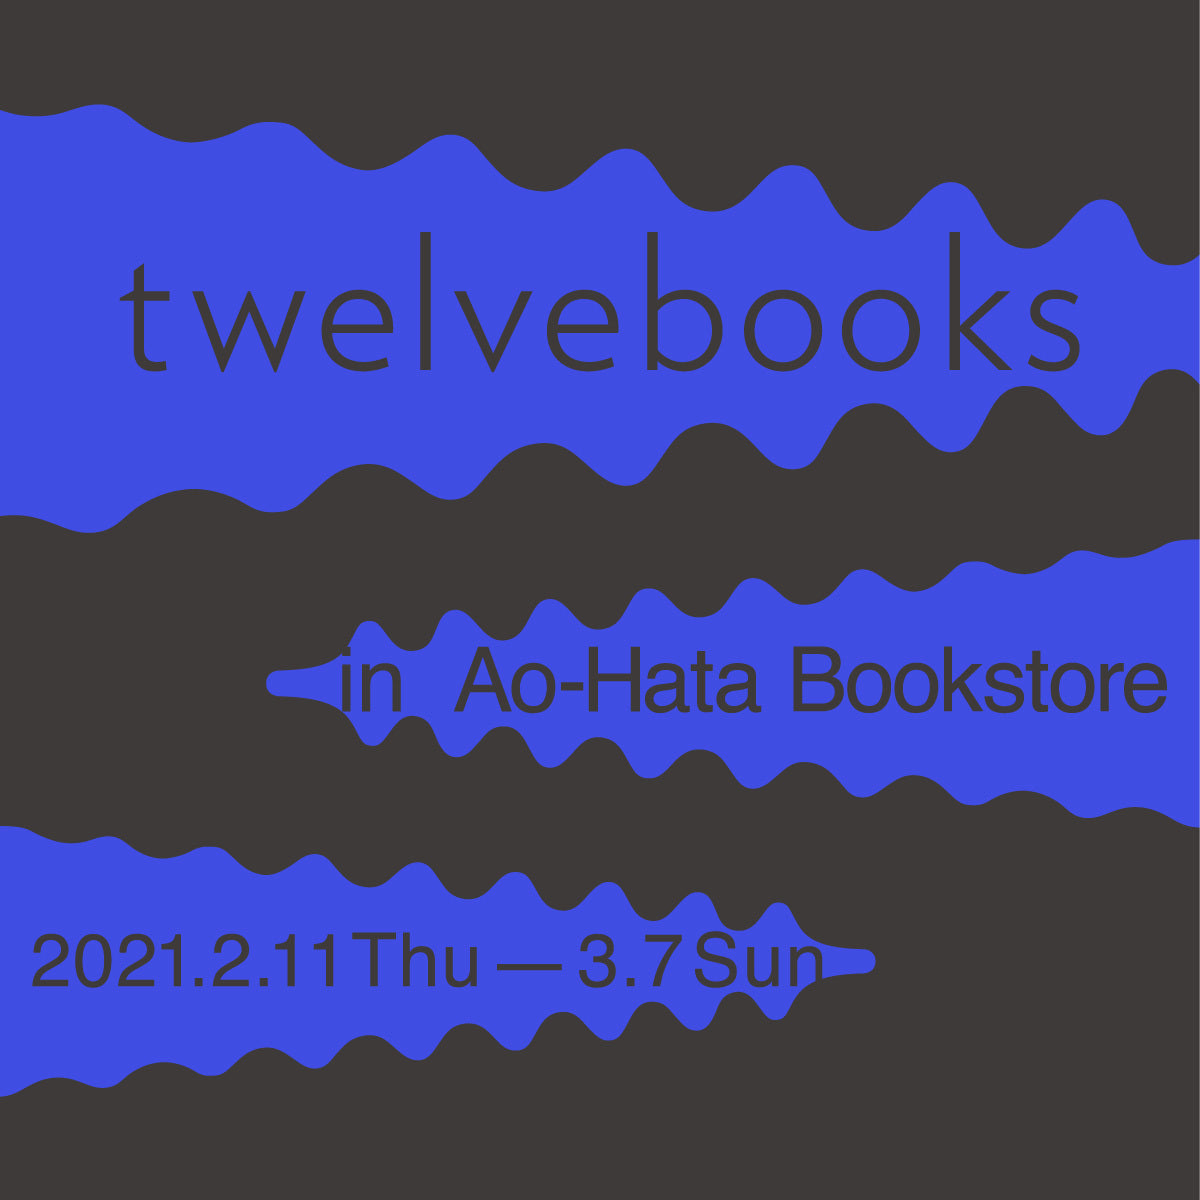 twelvebooks in Ao-Hata Bookstore